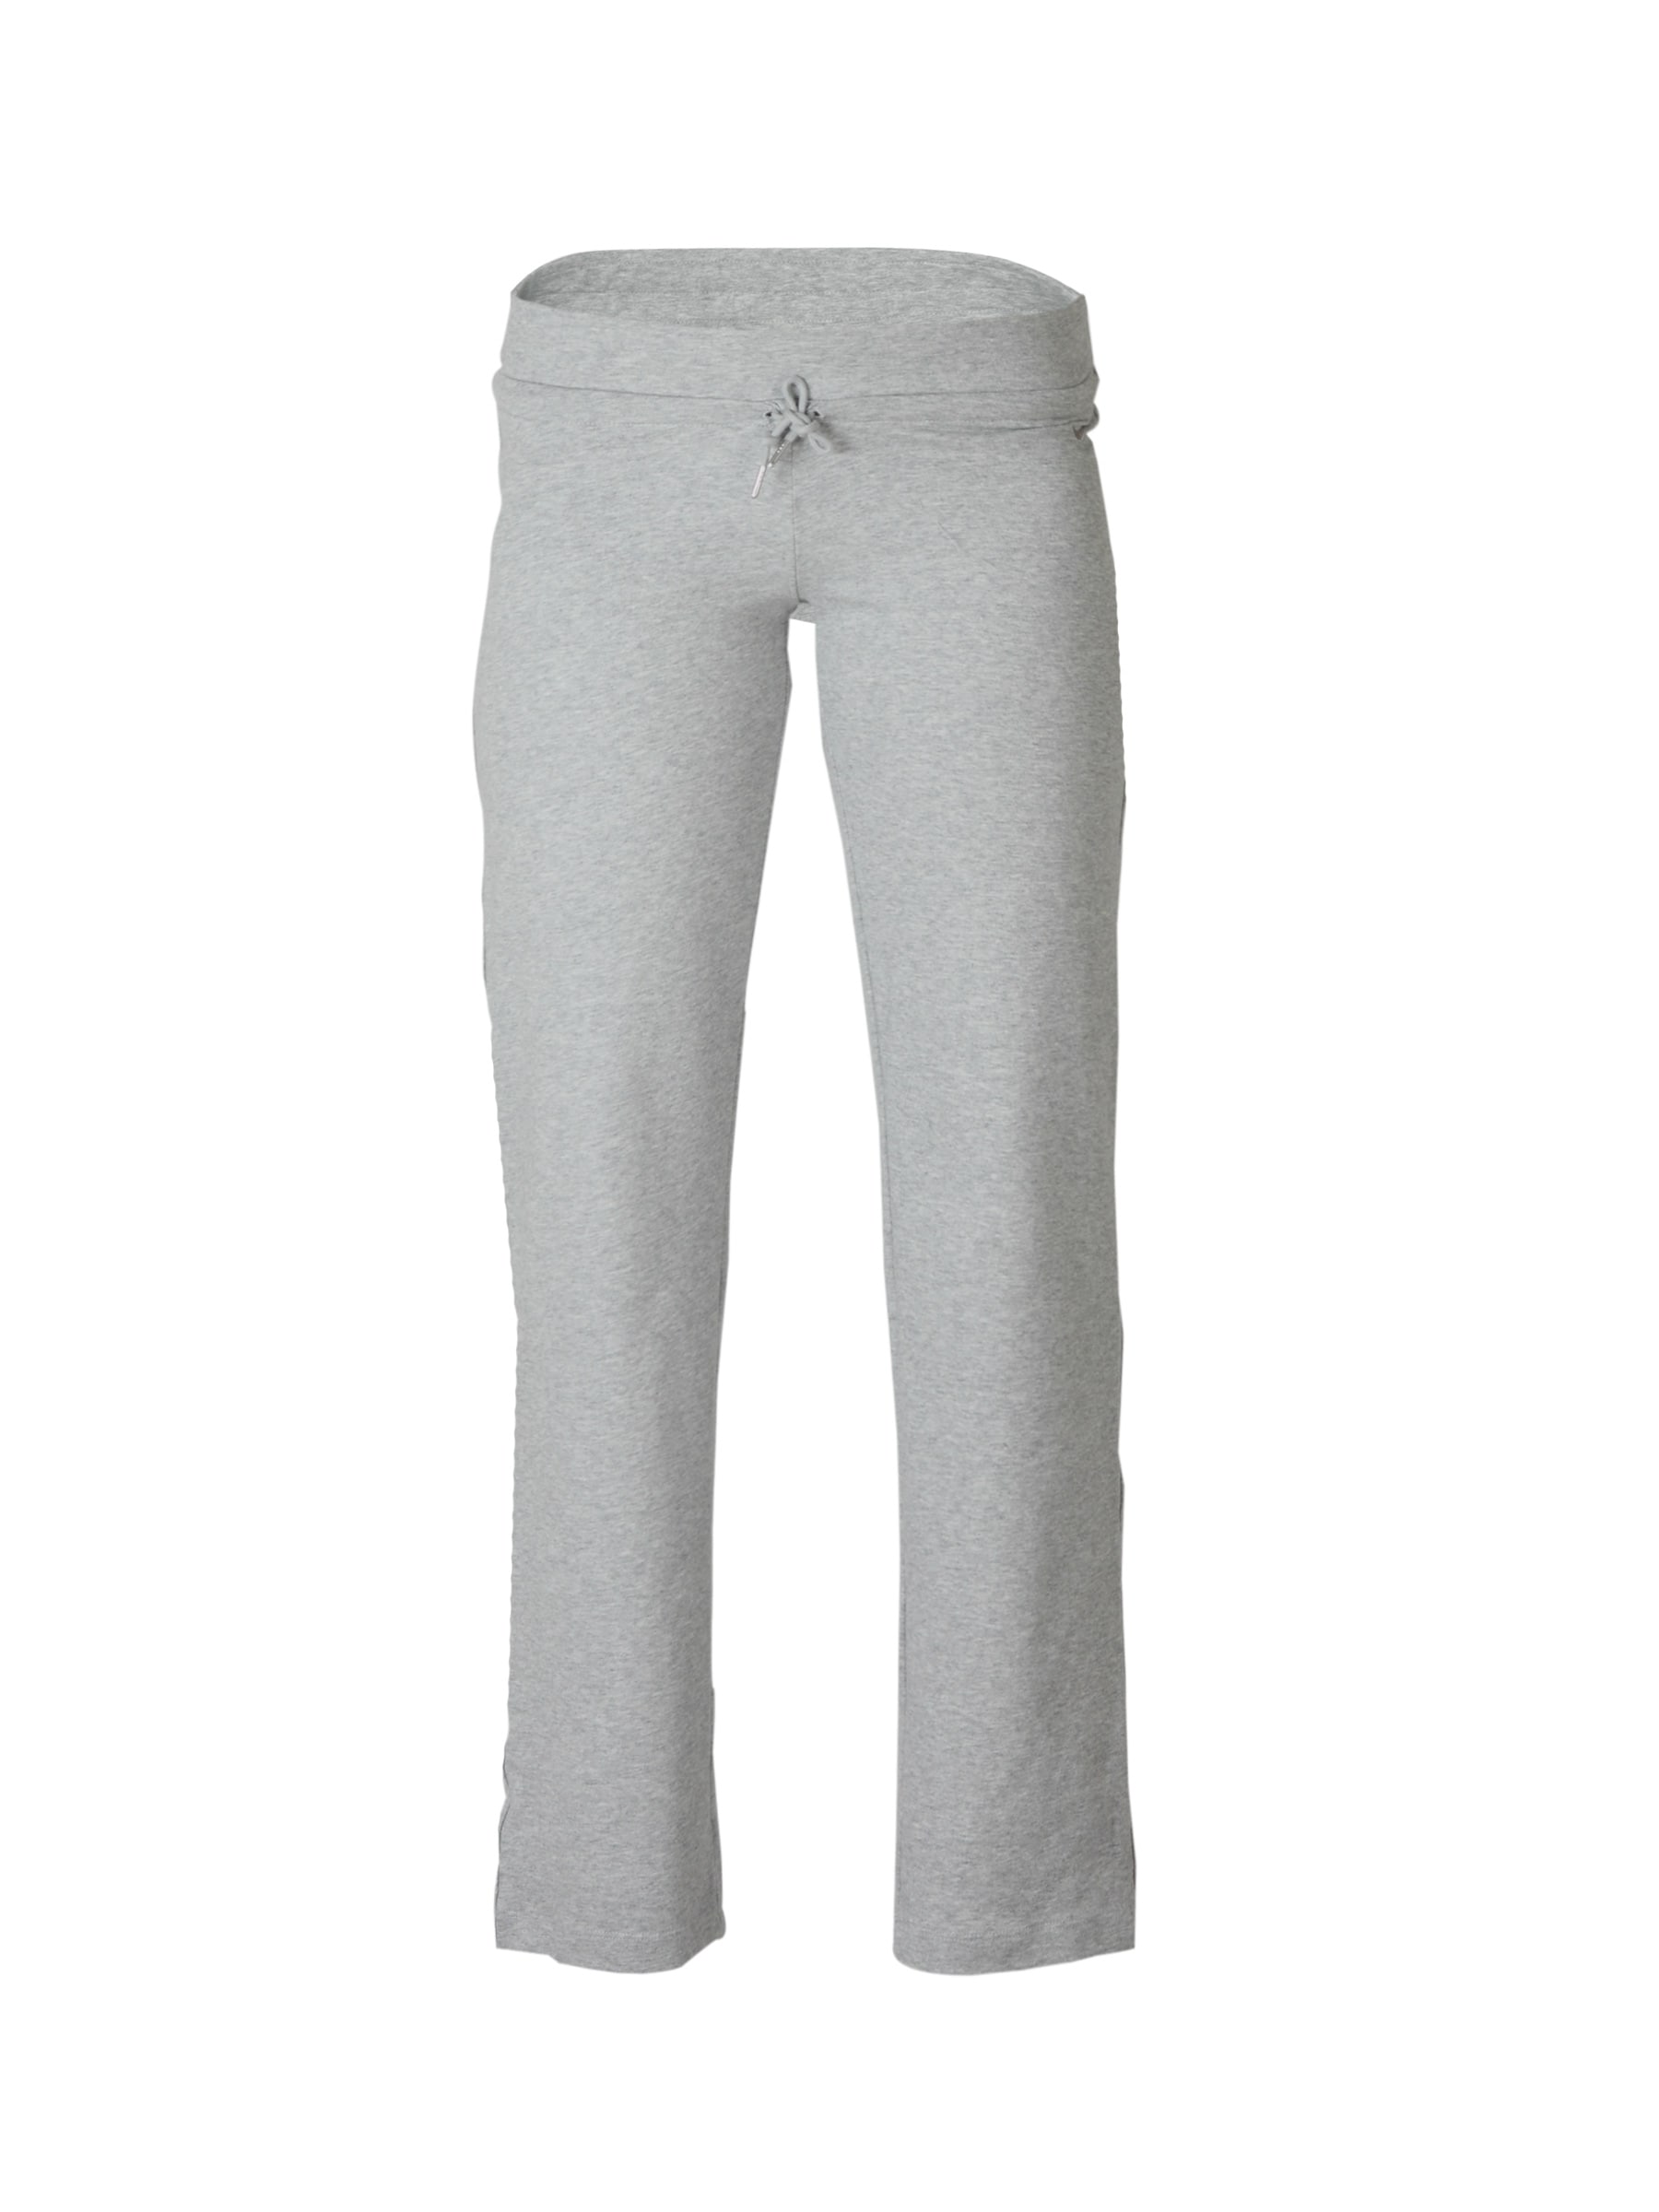 Nike Women Grey Track Pants